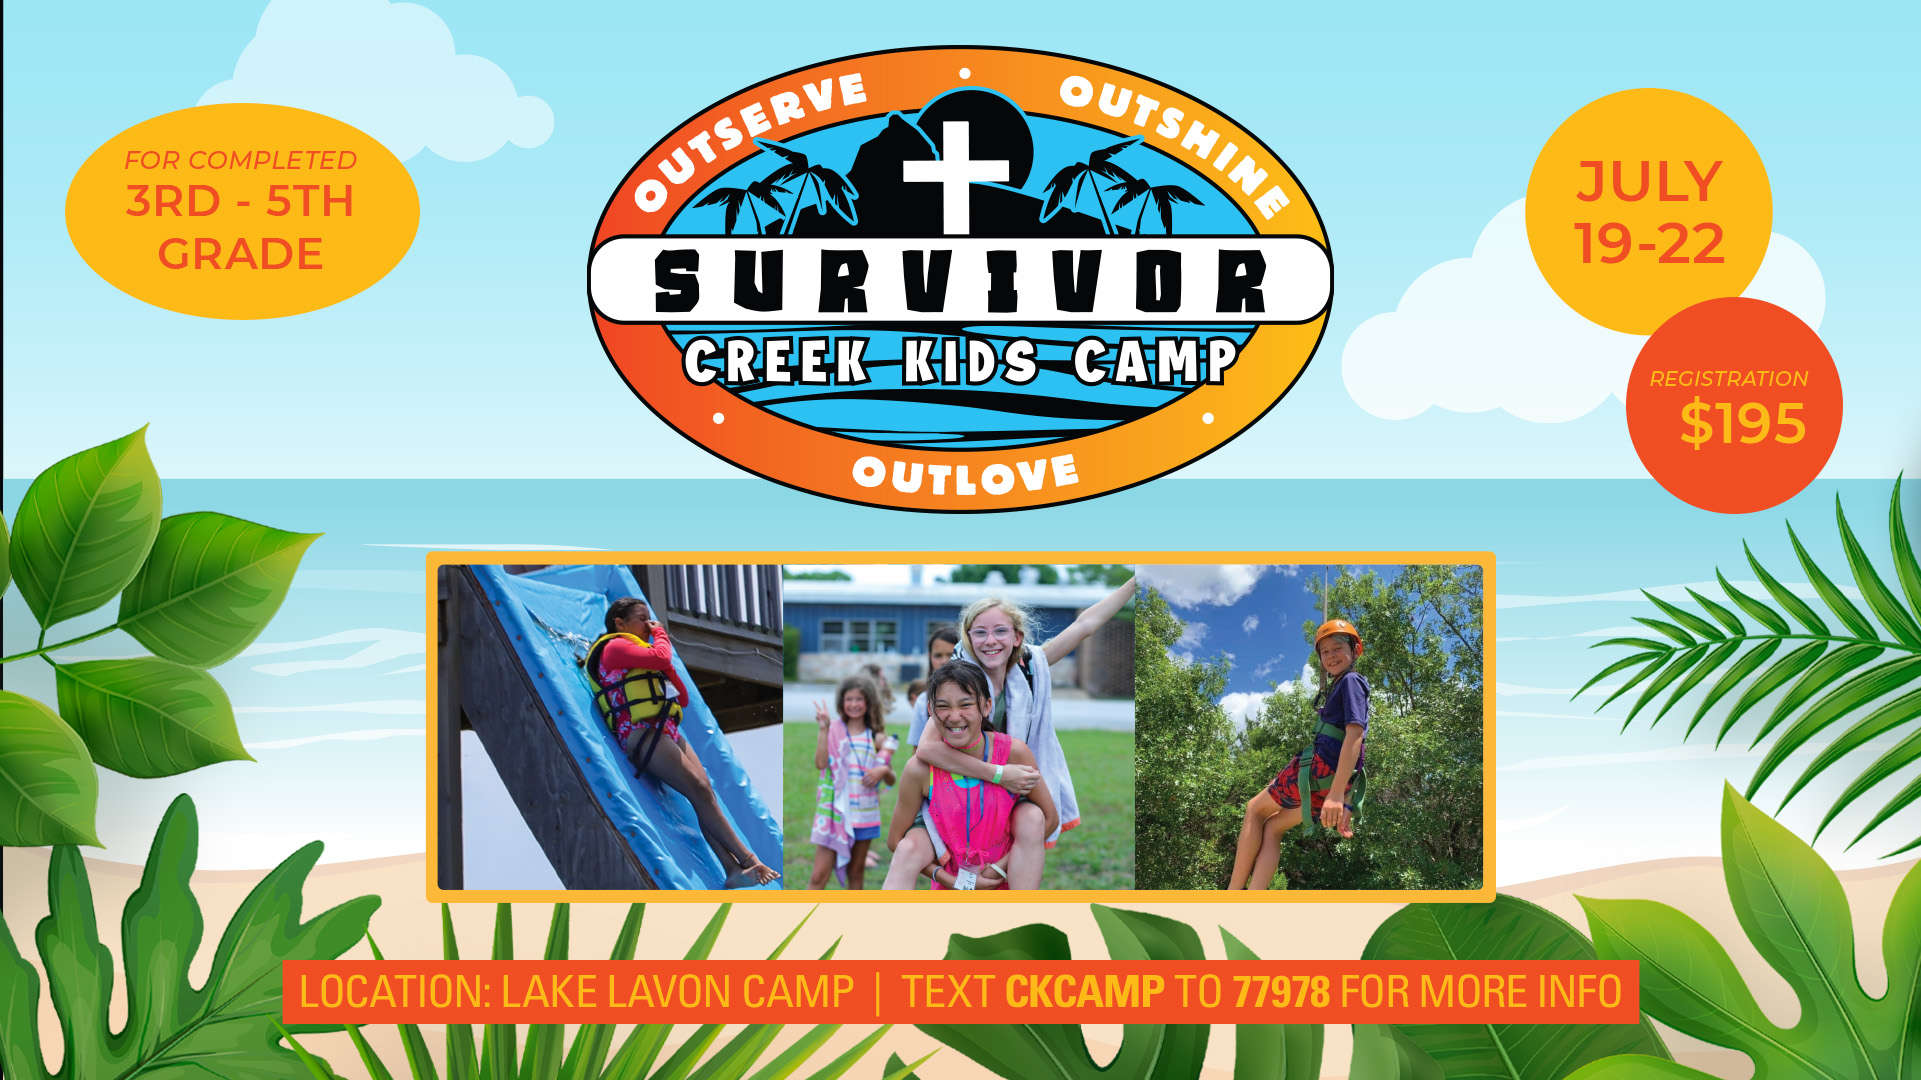 Cottonwood Creek Church - Creek Kids Camp